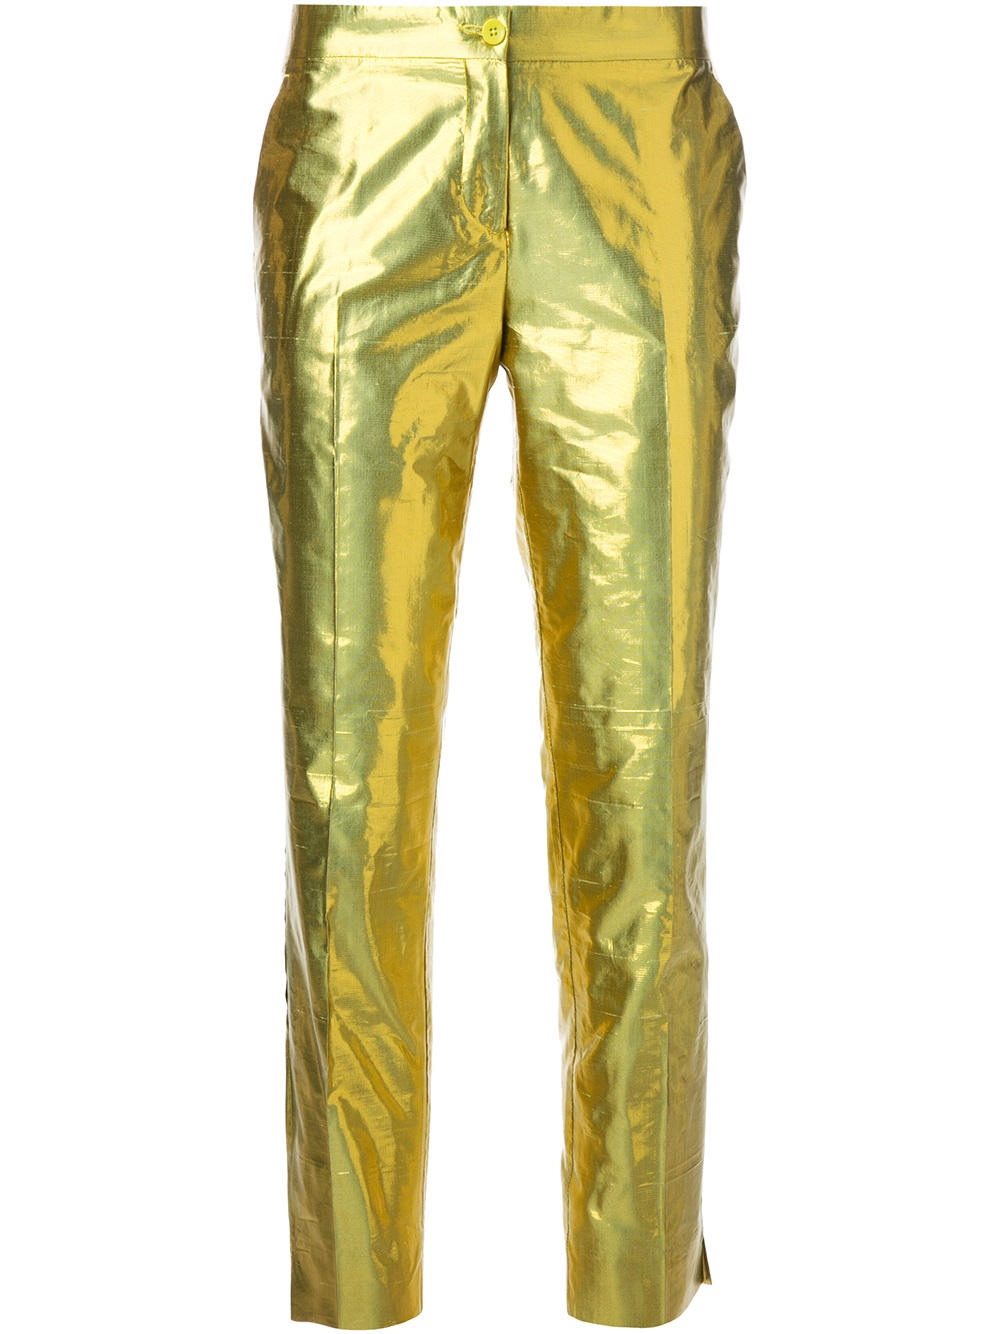 Lyst - Etro Metallic Trouser in Metallic